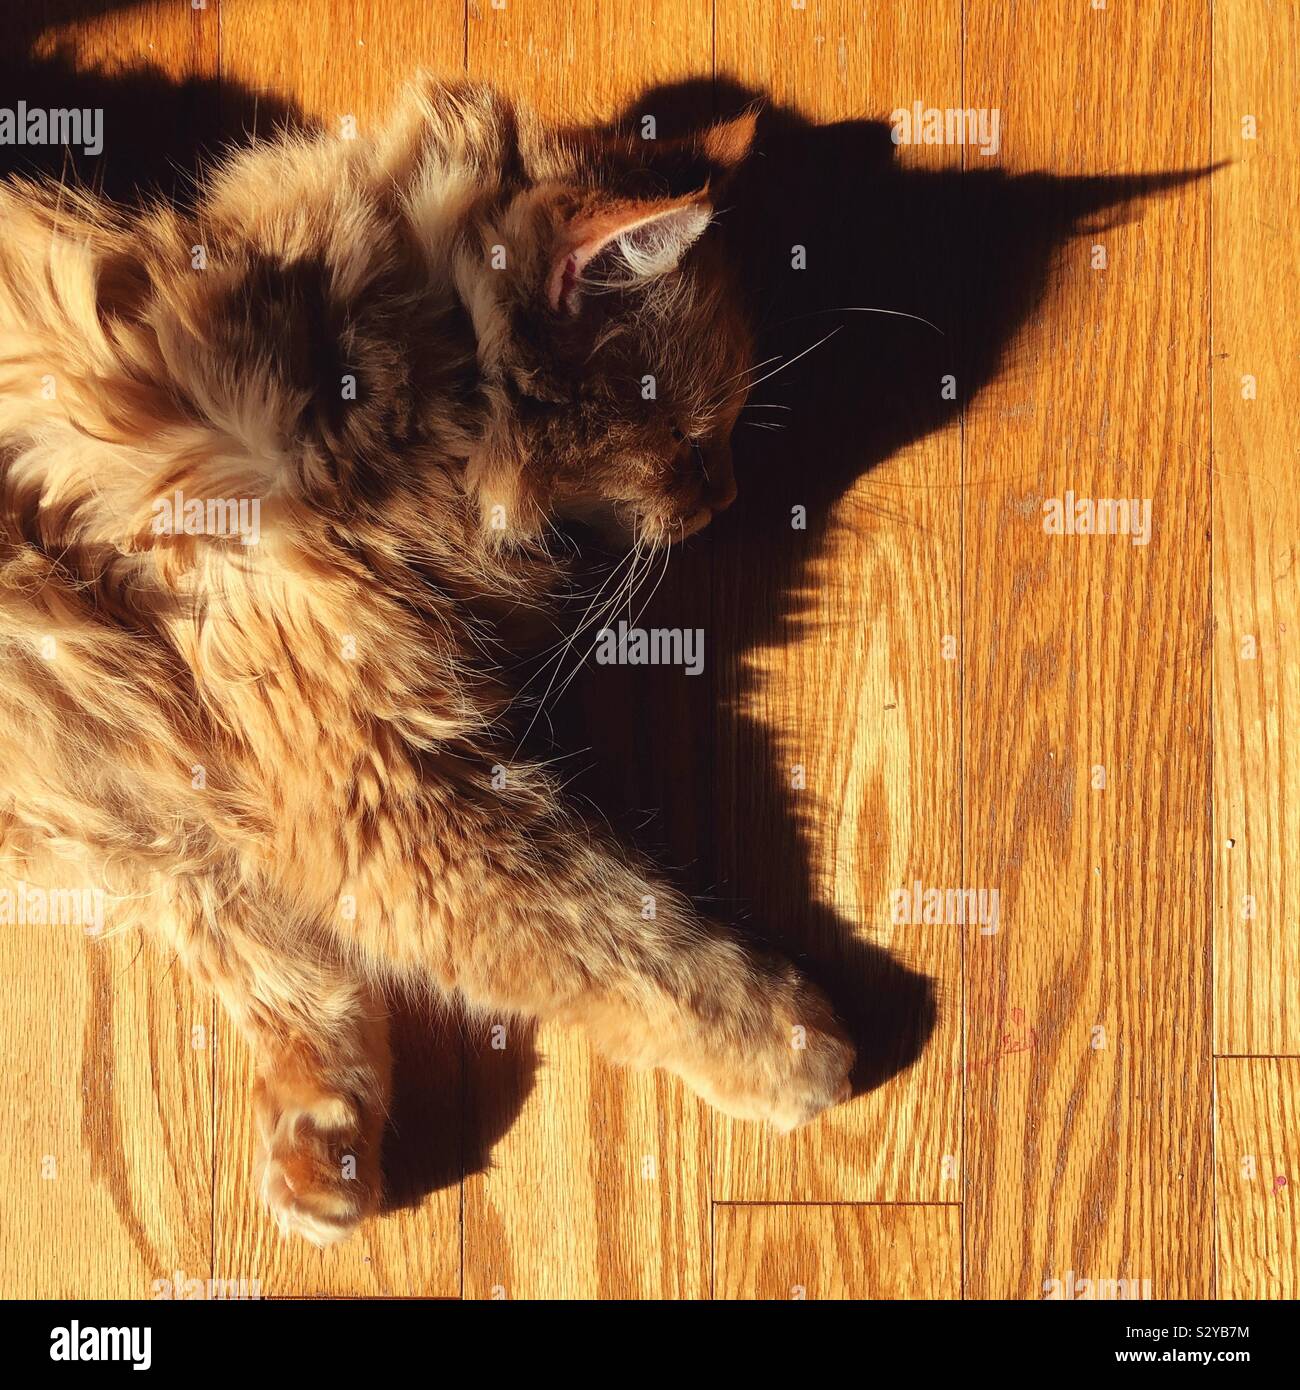 Fluffy orange cat sleeping in the sun with stark shadow on wooden floor Stock Photo